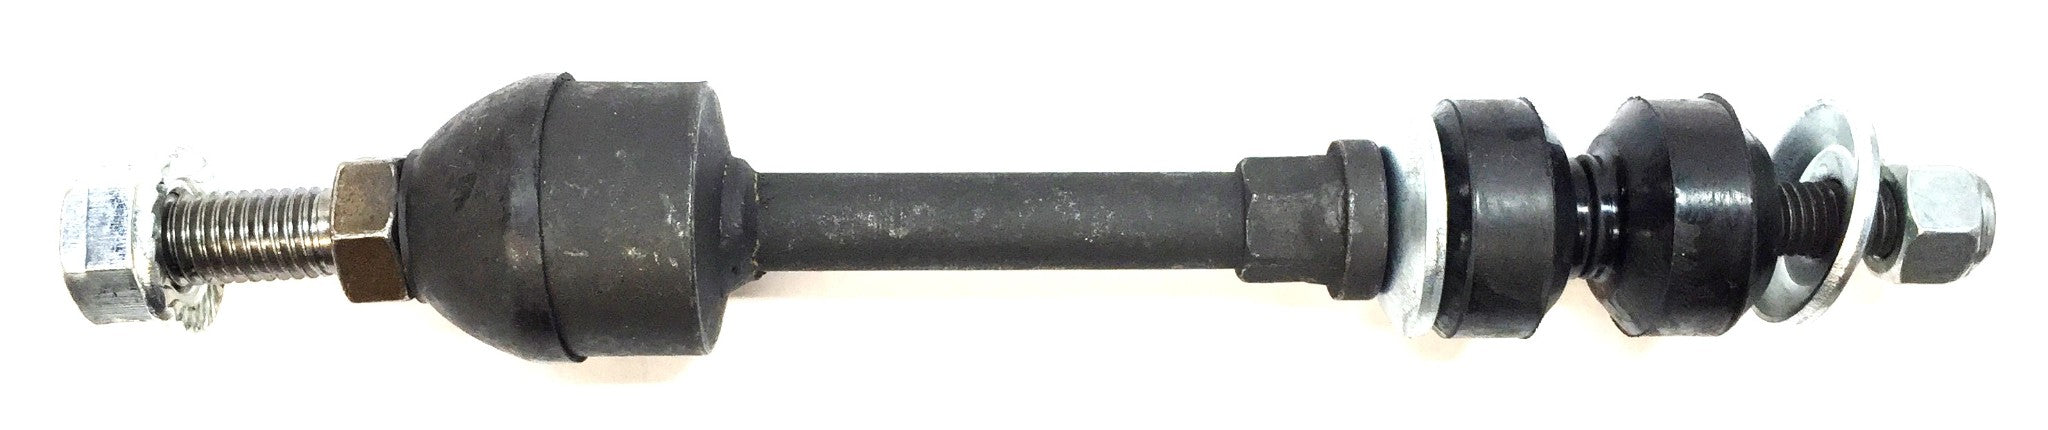 Napa PROFORMER Suspension Stabilizer Link Bar 1880543 NOS